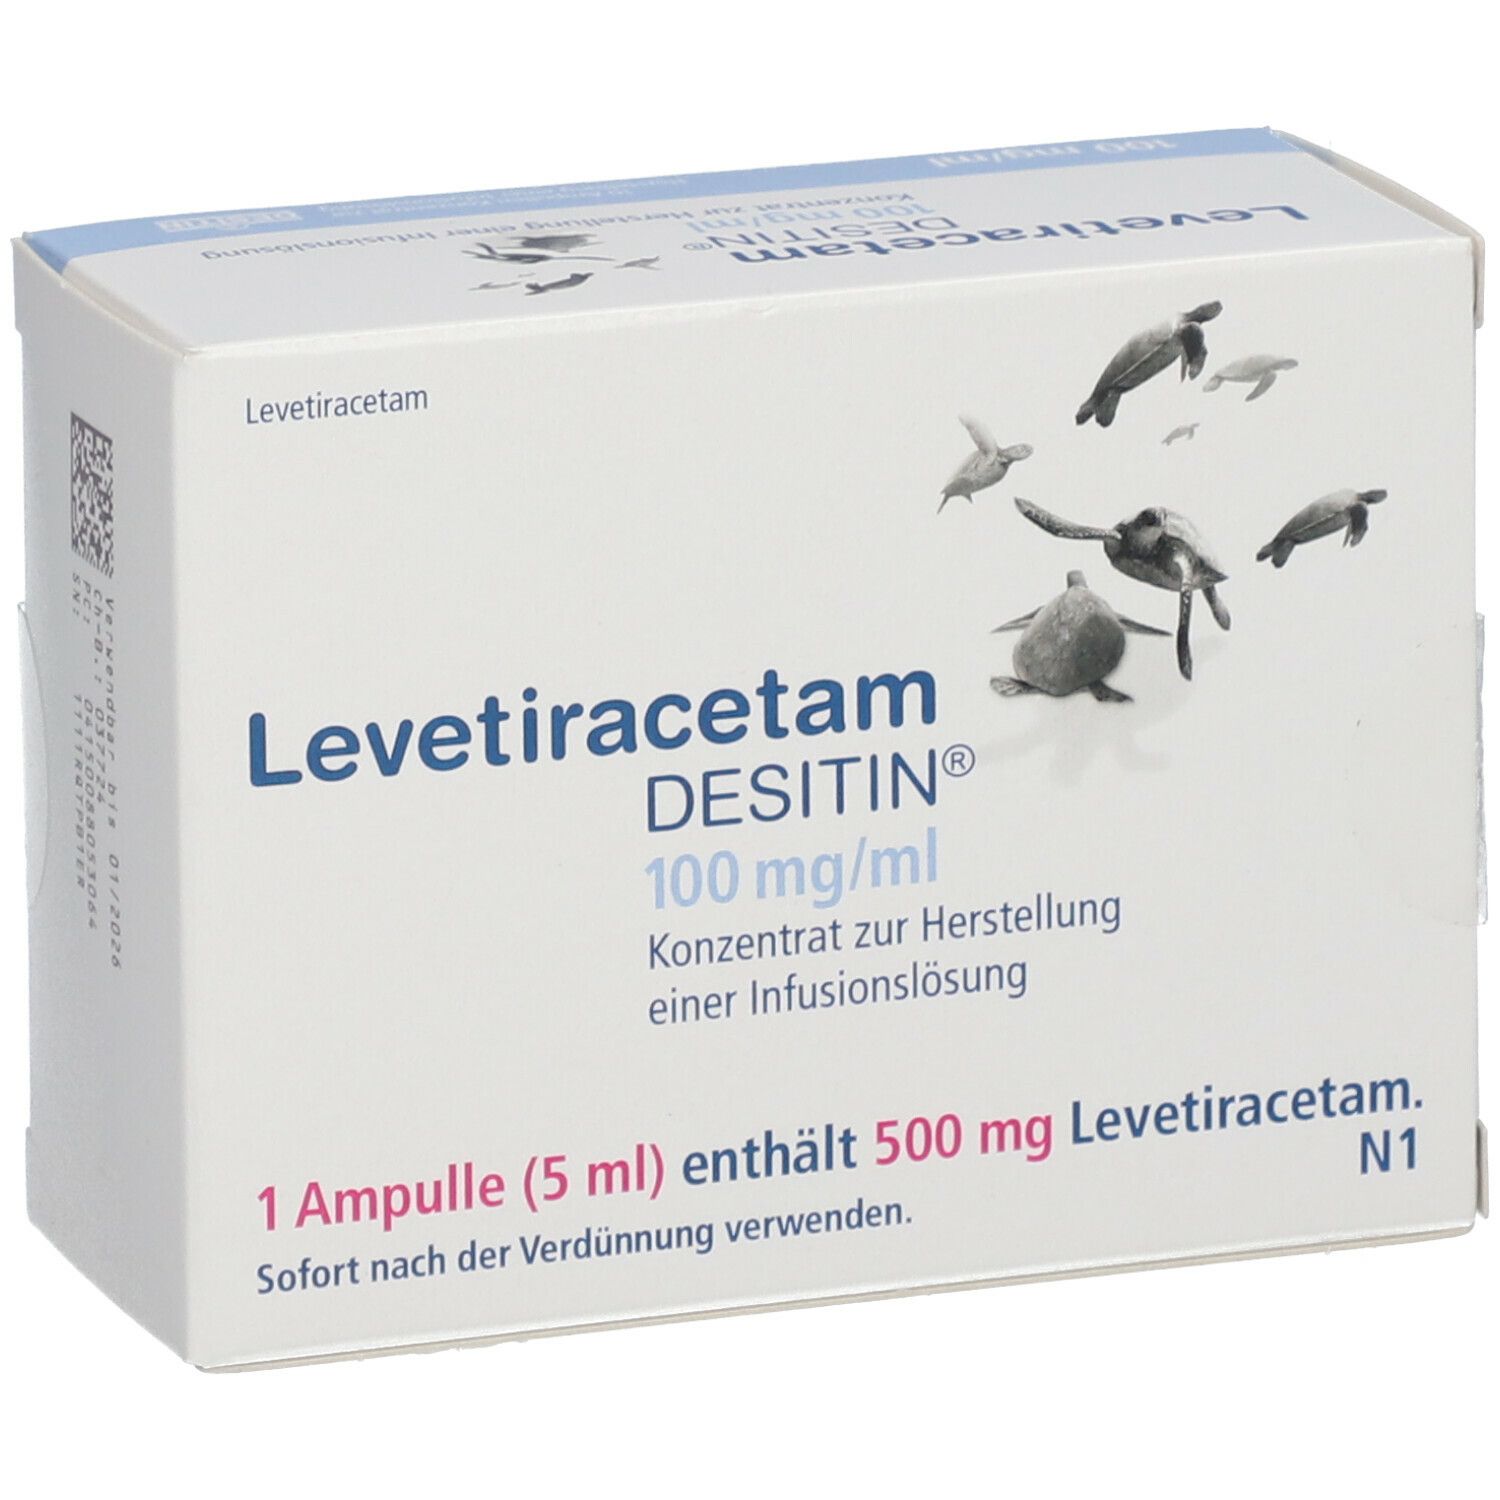 Levetiracetam DESITIN® 100 mg/ml